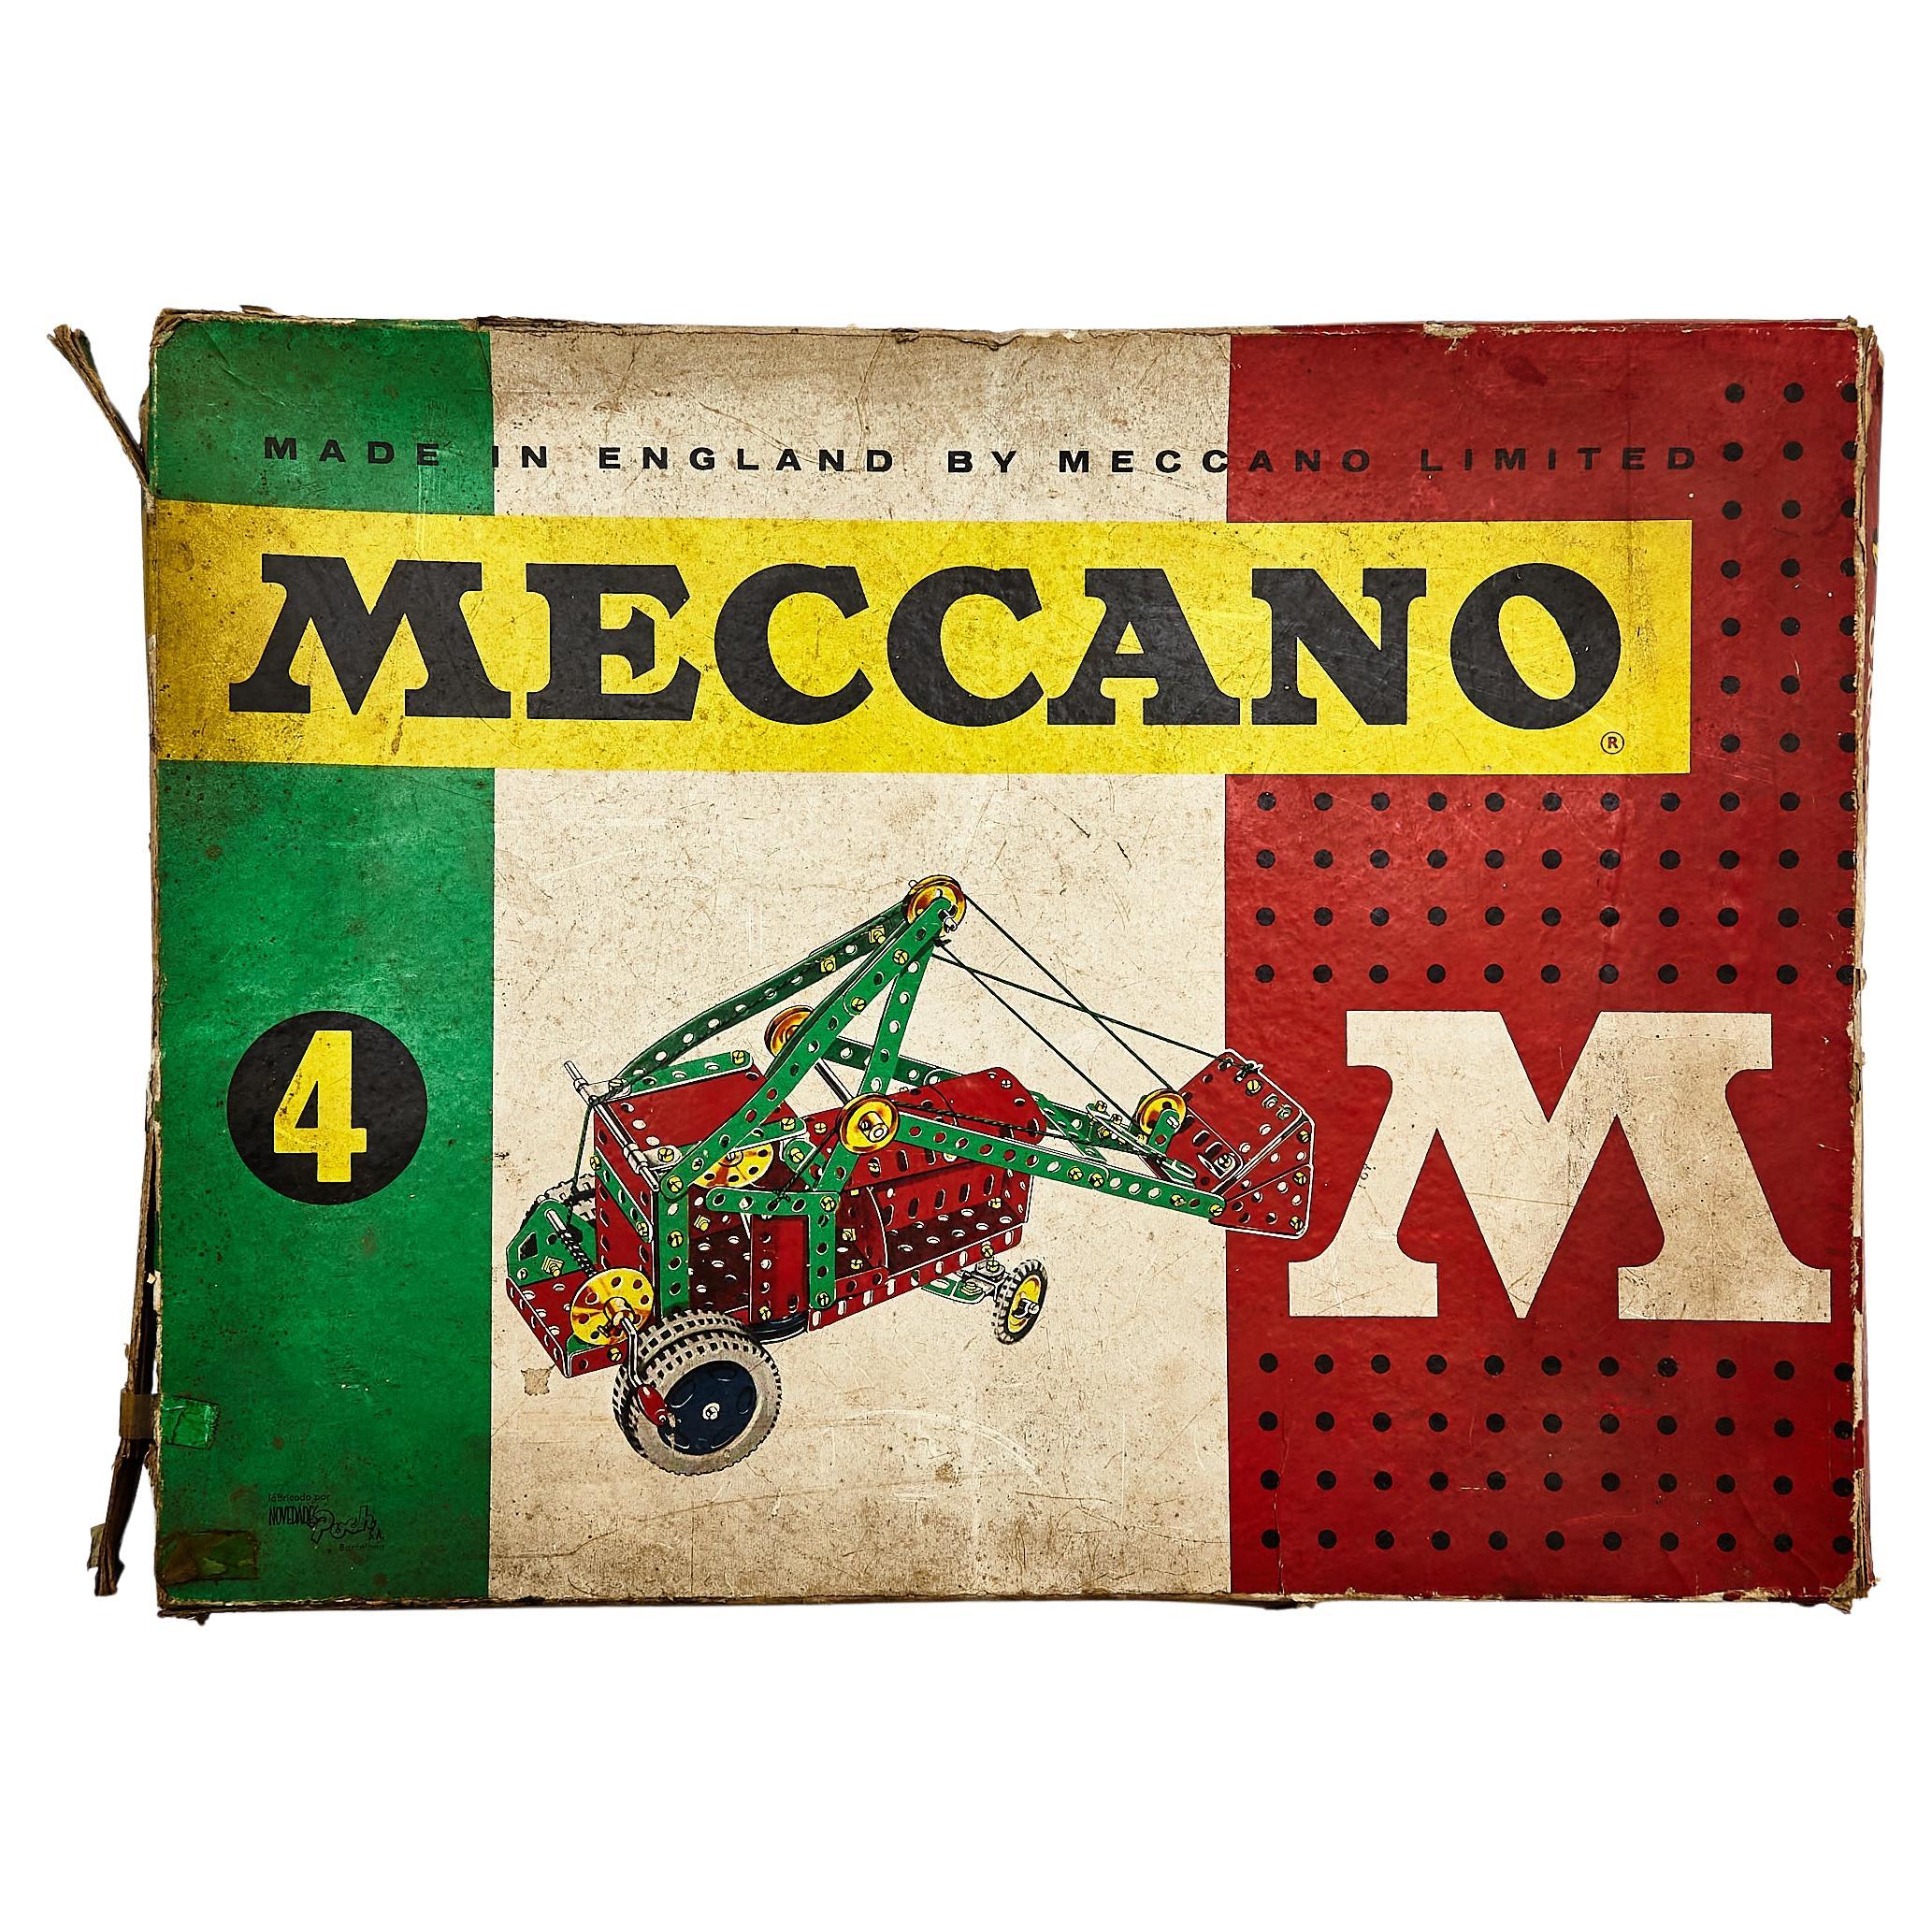 Vintage Meccano Building Game in Original Box For Sale